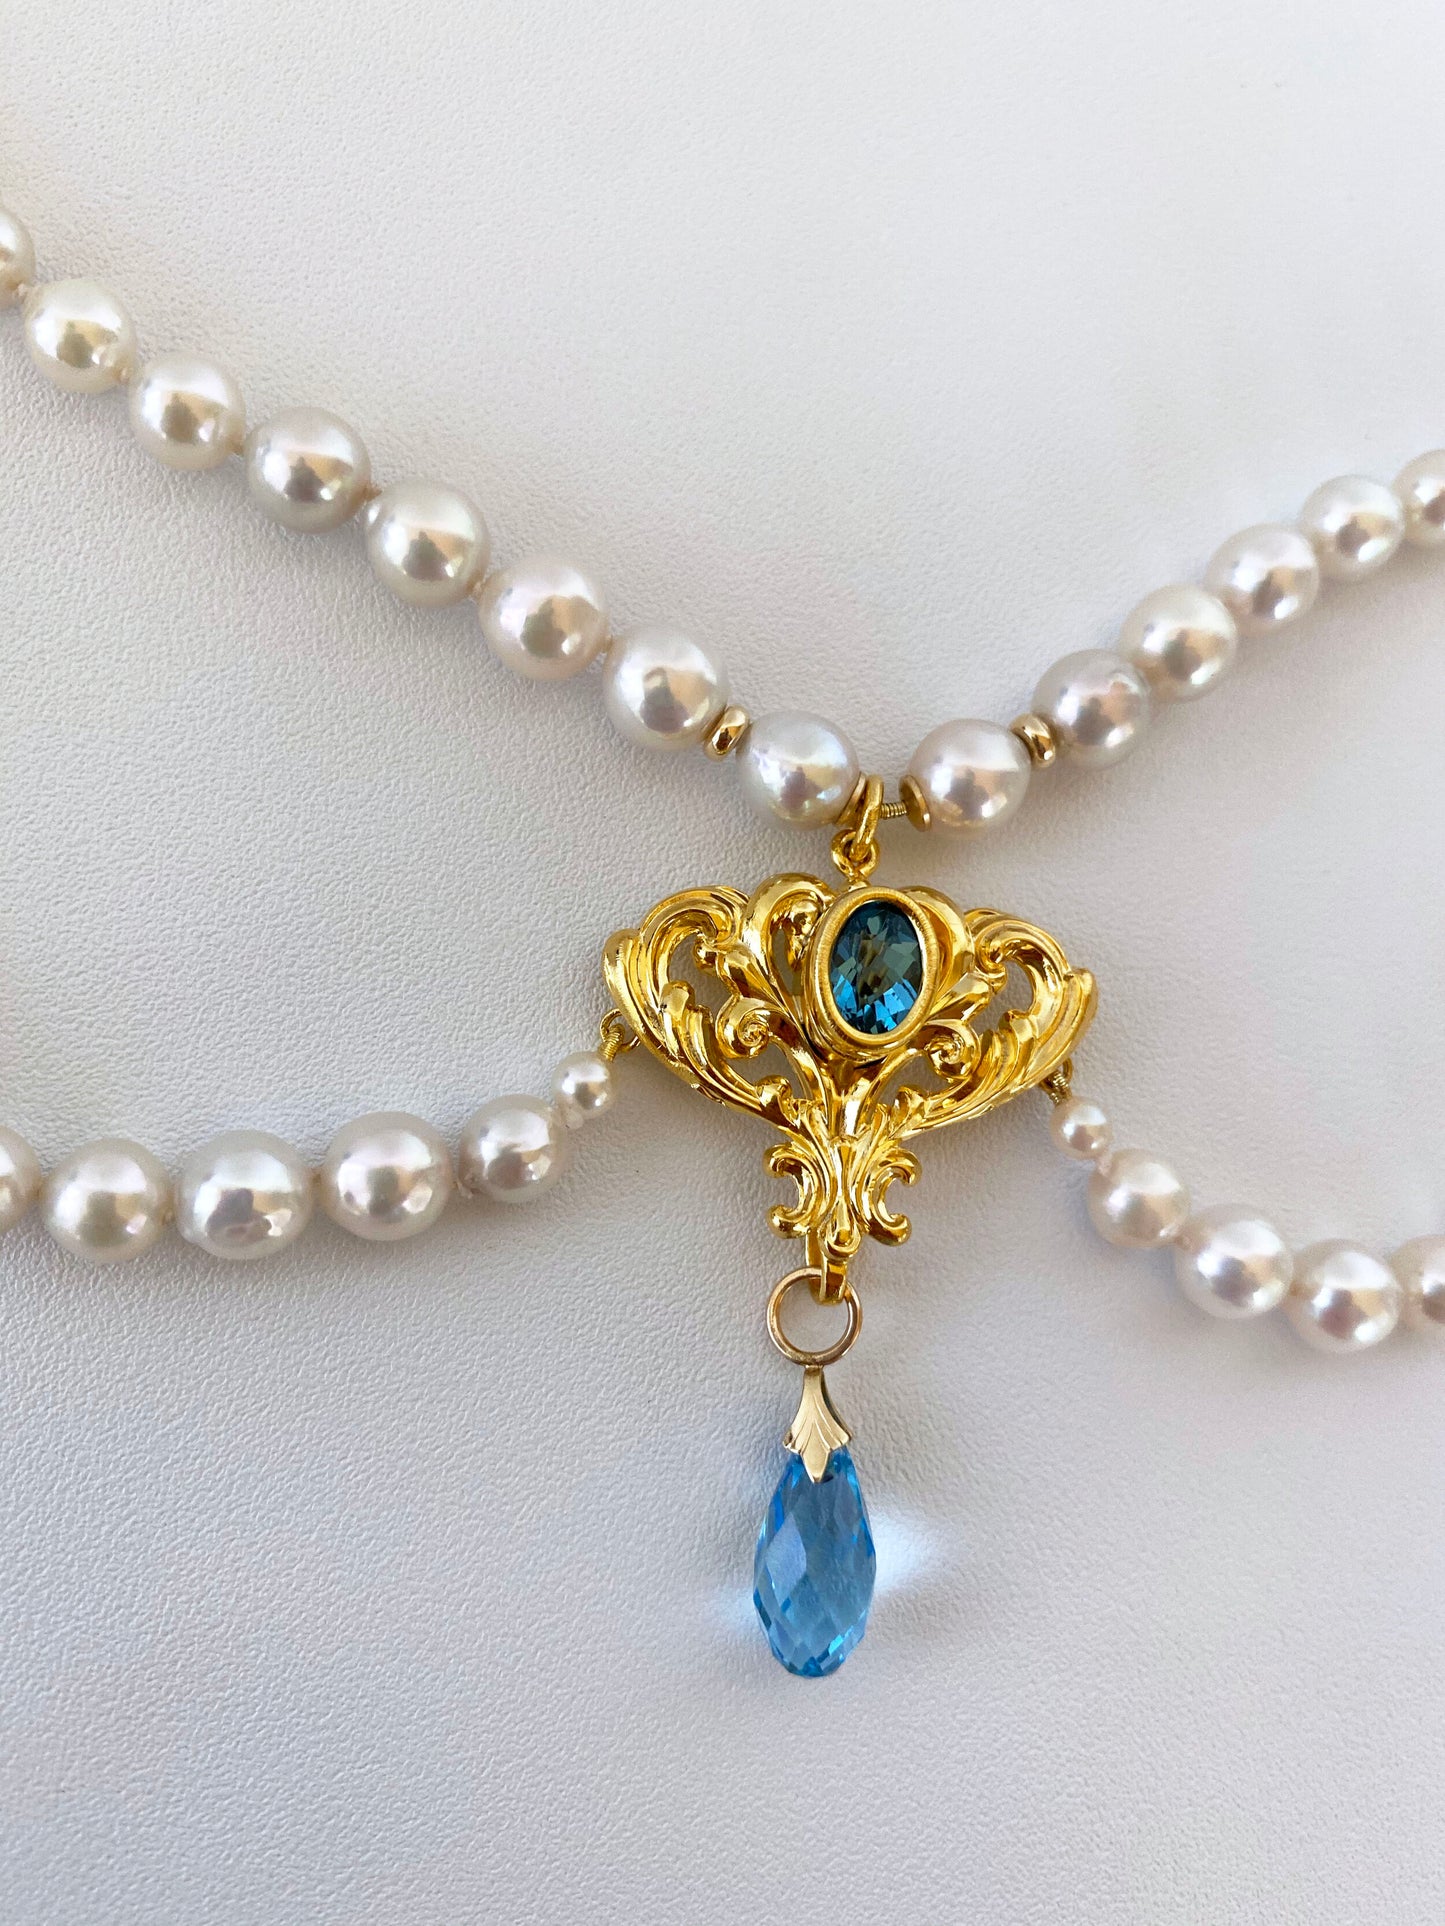 Marina J. London Blue Topaz, Pearl, 14K Yellow Gold & Victorian Pendant Necklace